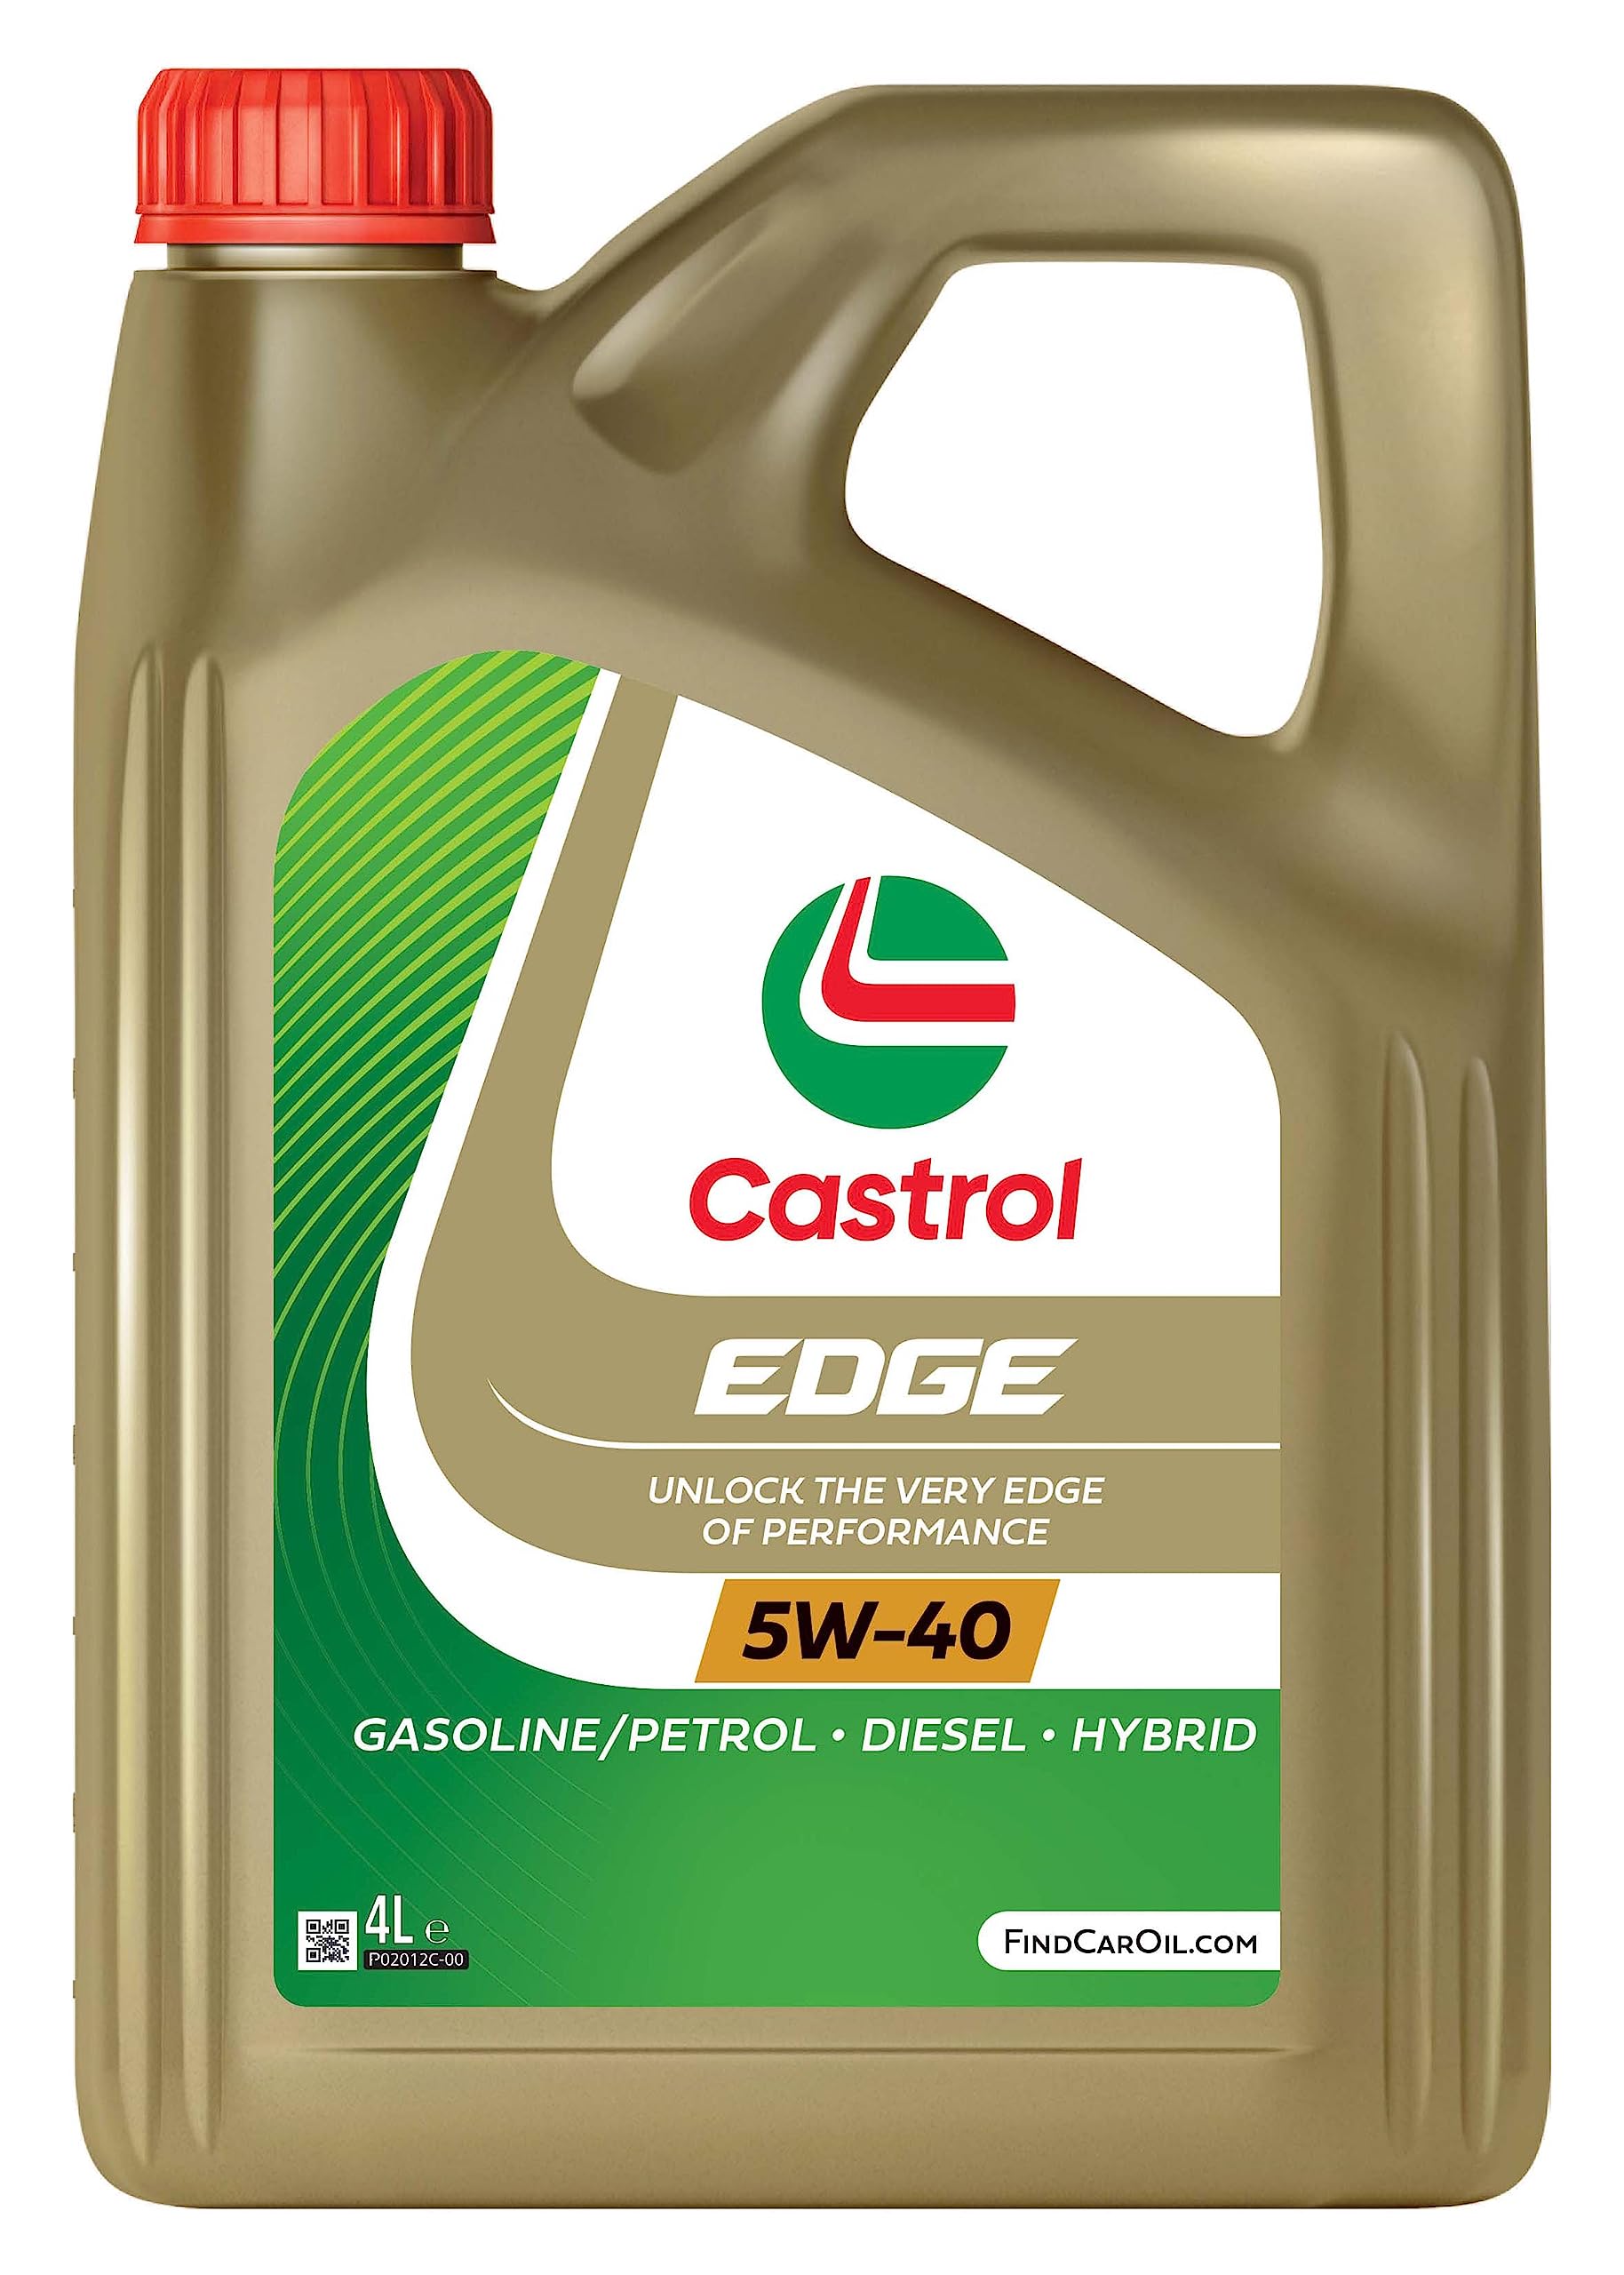 Castrol EDGE 5W-40 Motoröl, 4L von Castrol